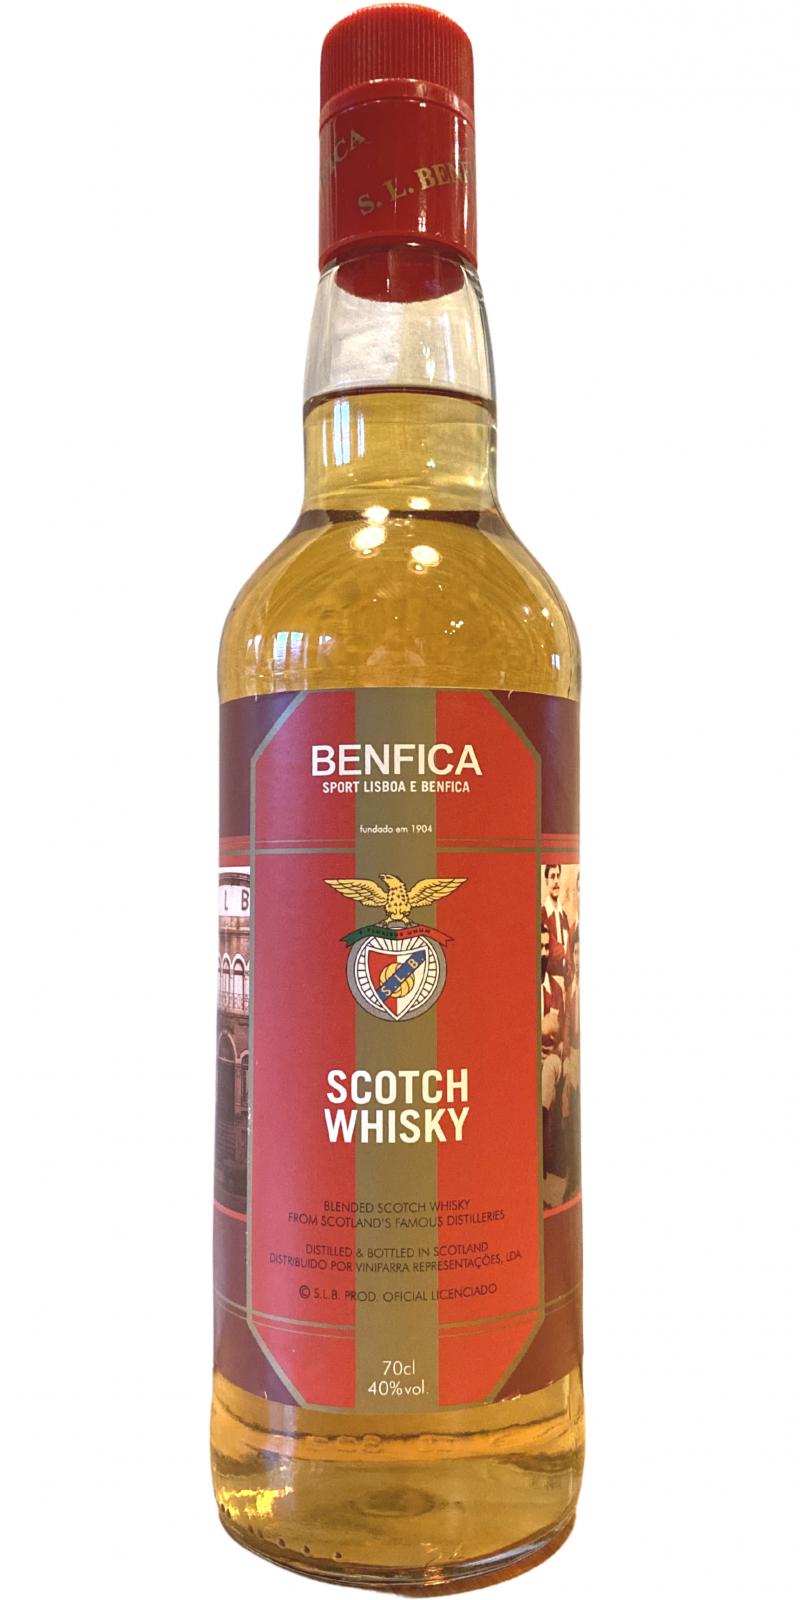 Benfica Sport Lisboa e Benfica Blended Scotch Whisky 40% 700ml